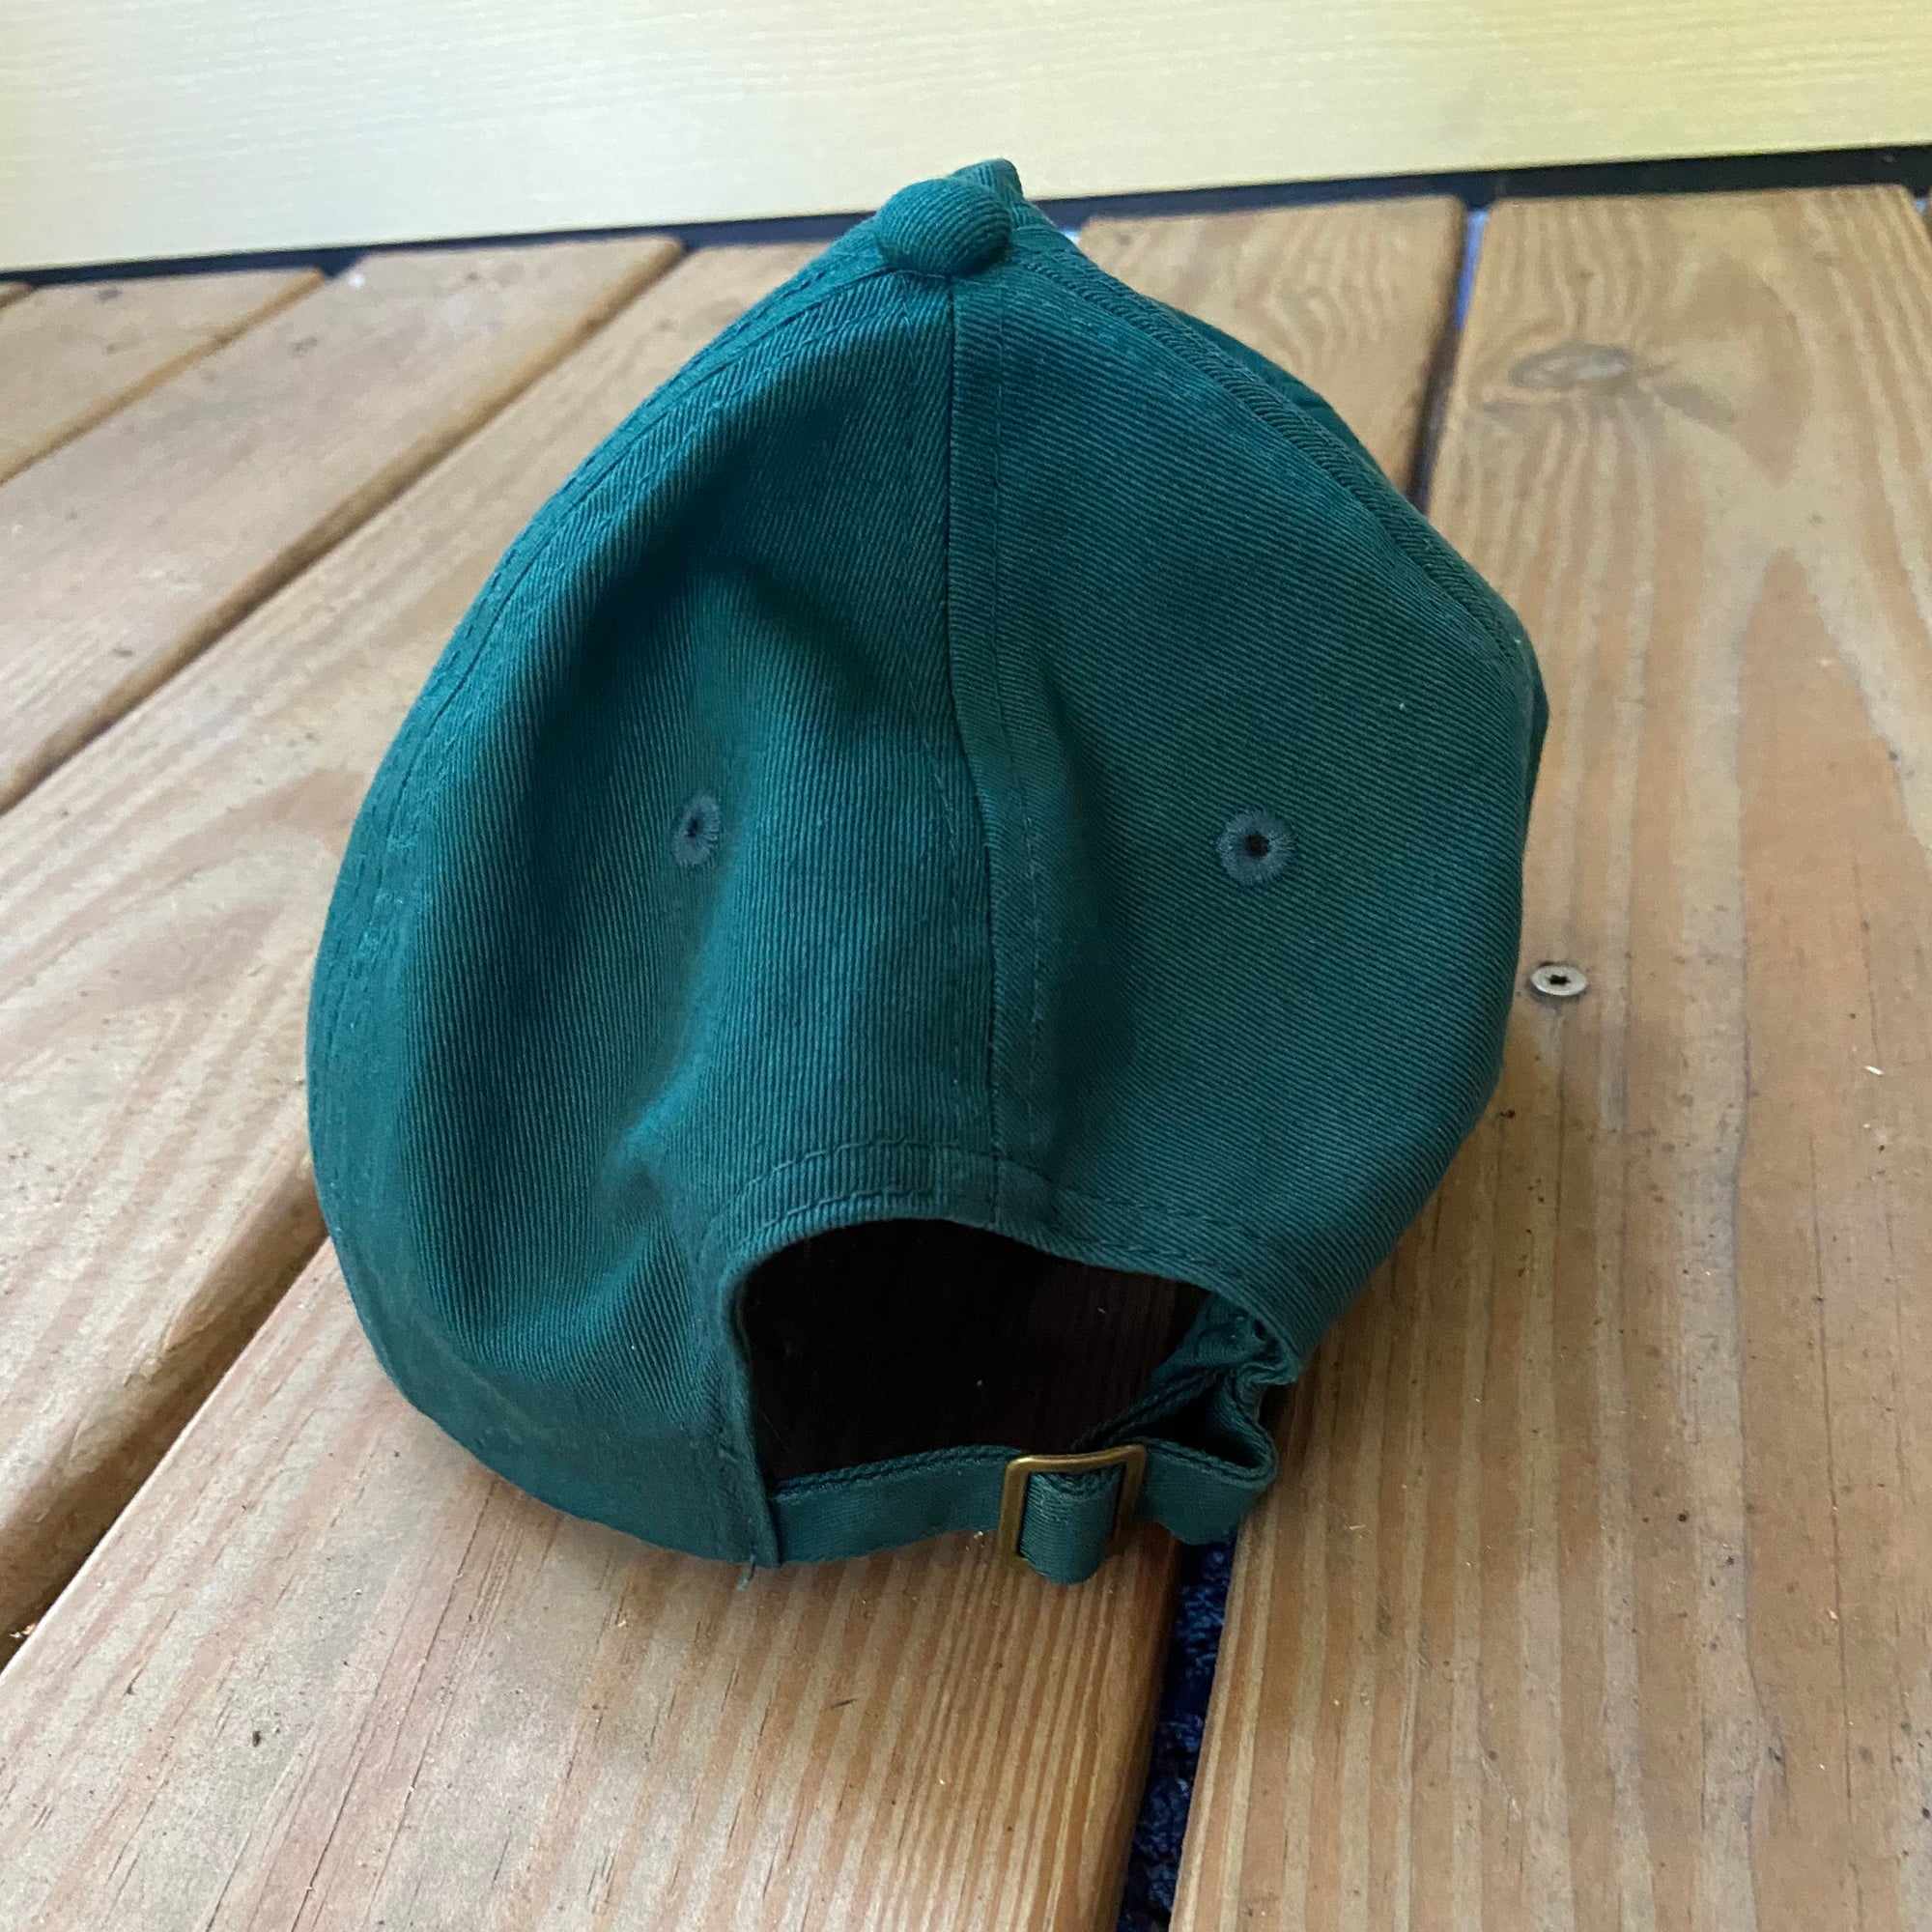 Fish Co Hat - Green